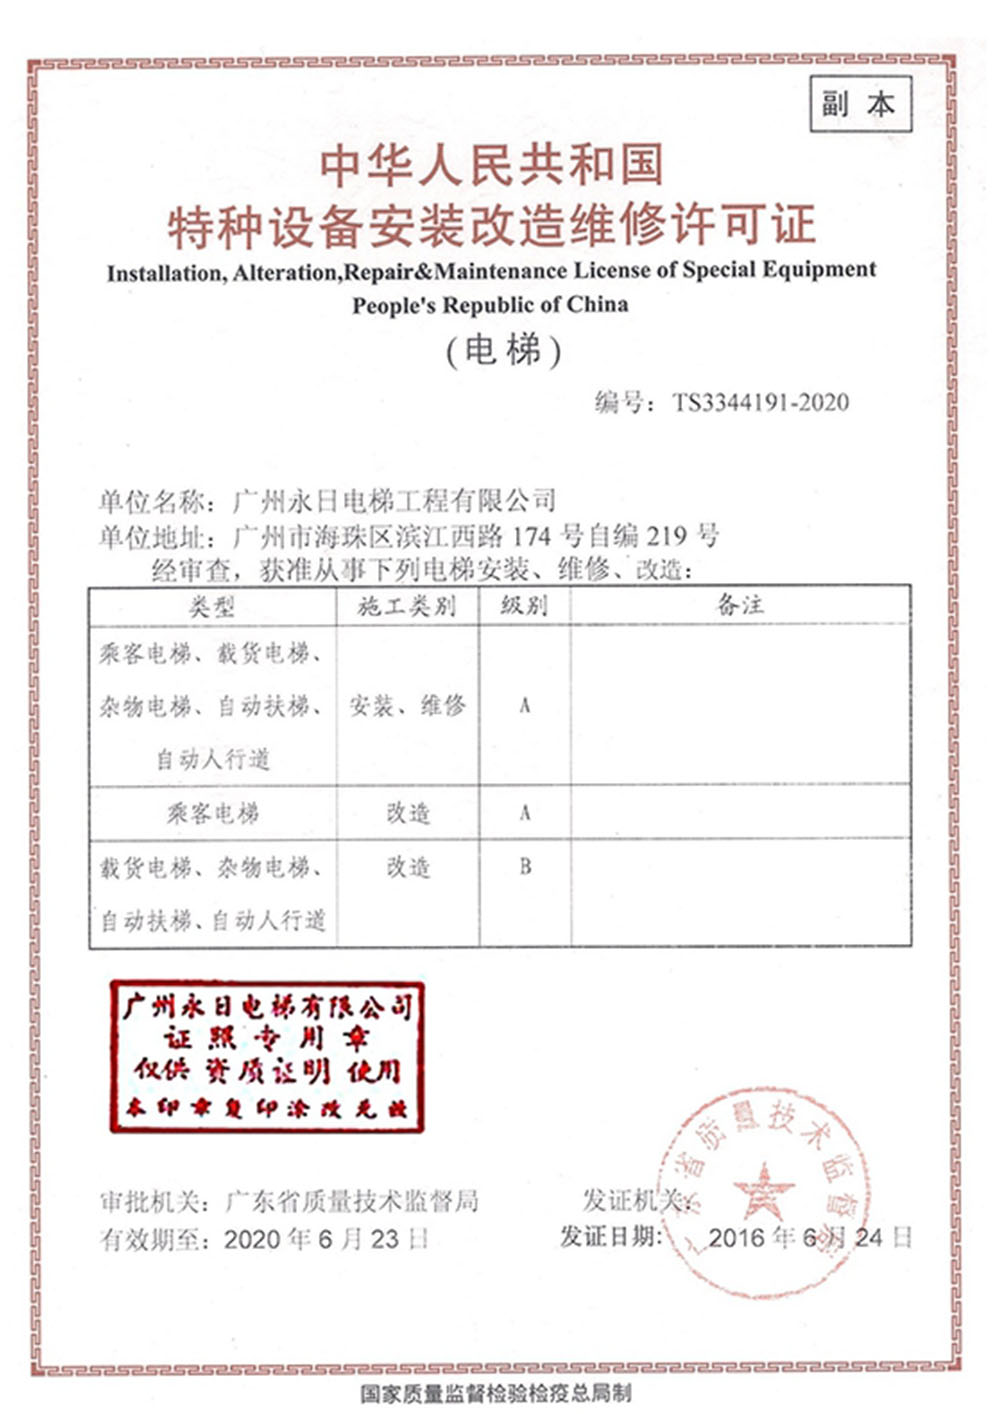 Installation, Maintenance and Transformation License (Guangzhou)